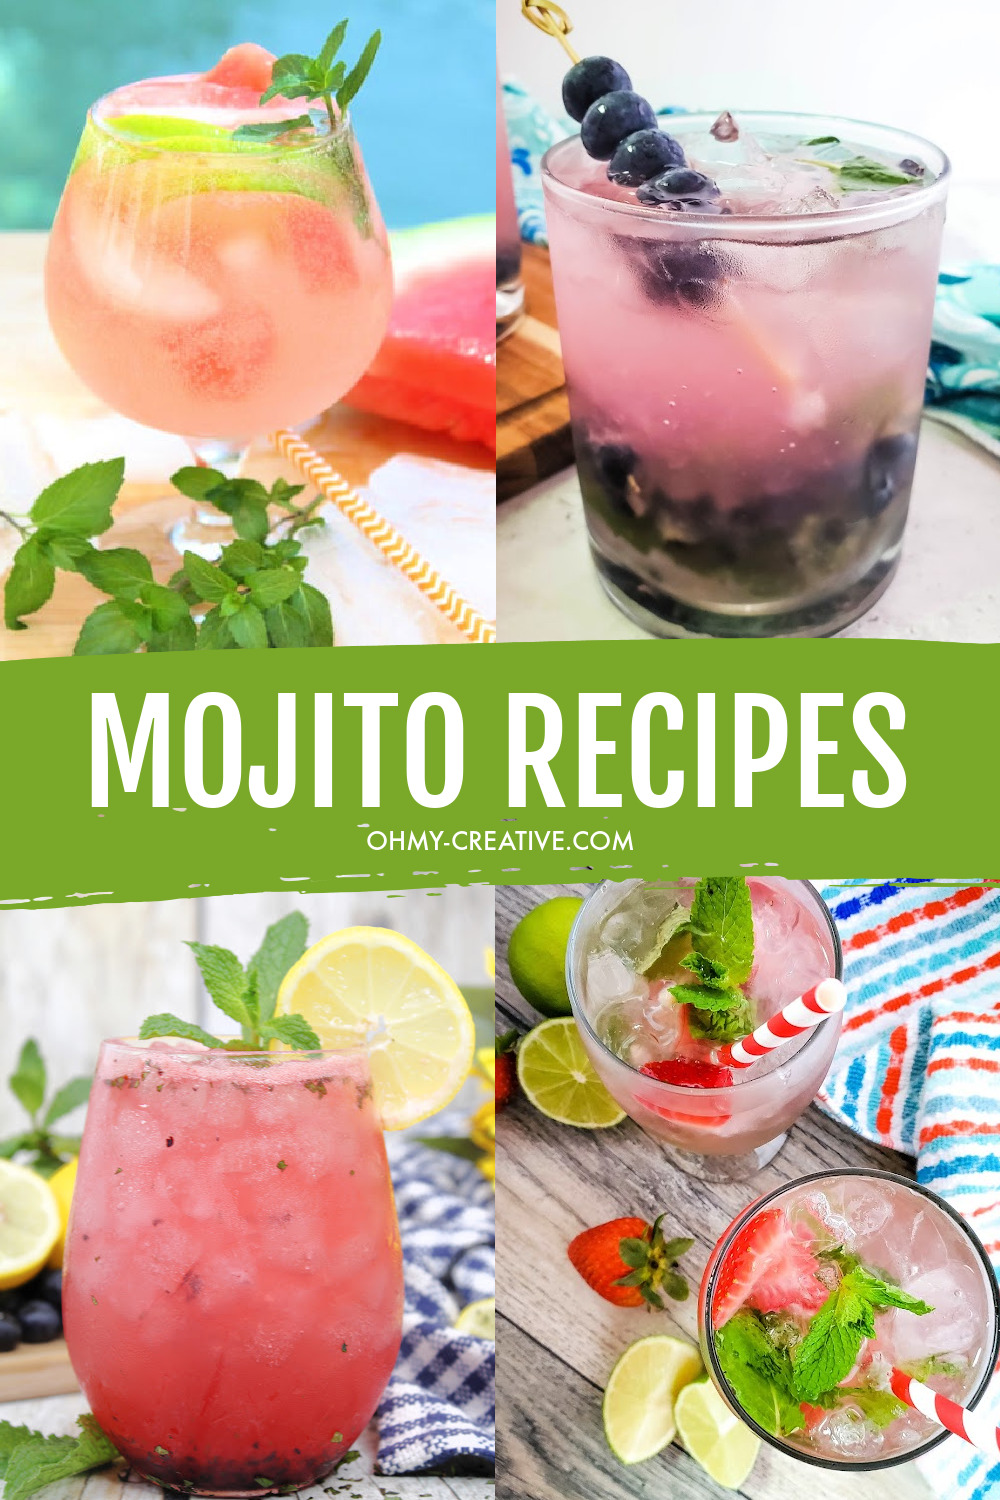 The Best Tasting Mojito Recipes